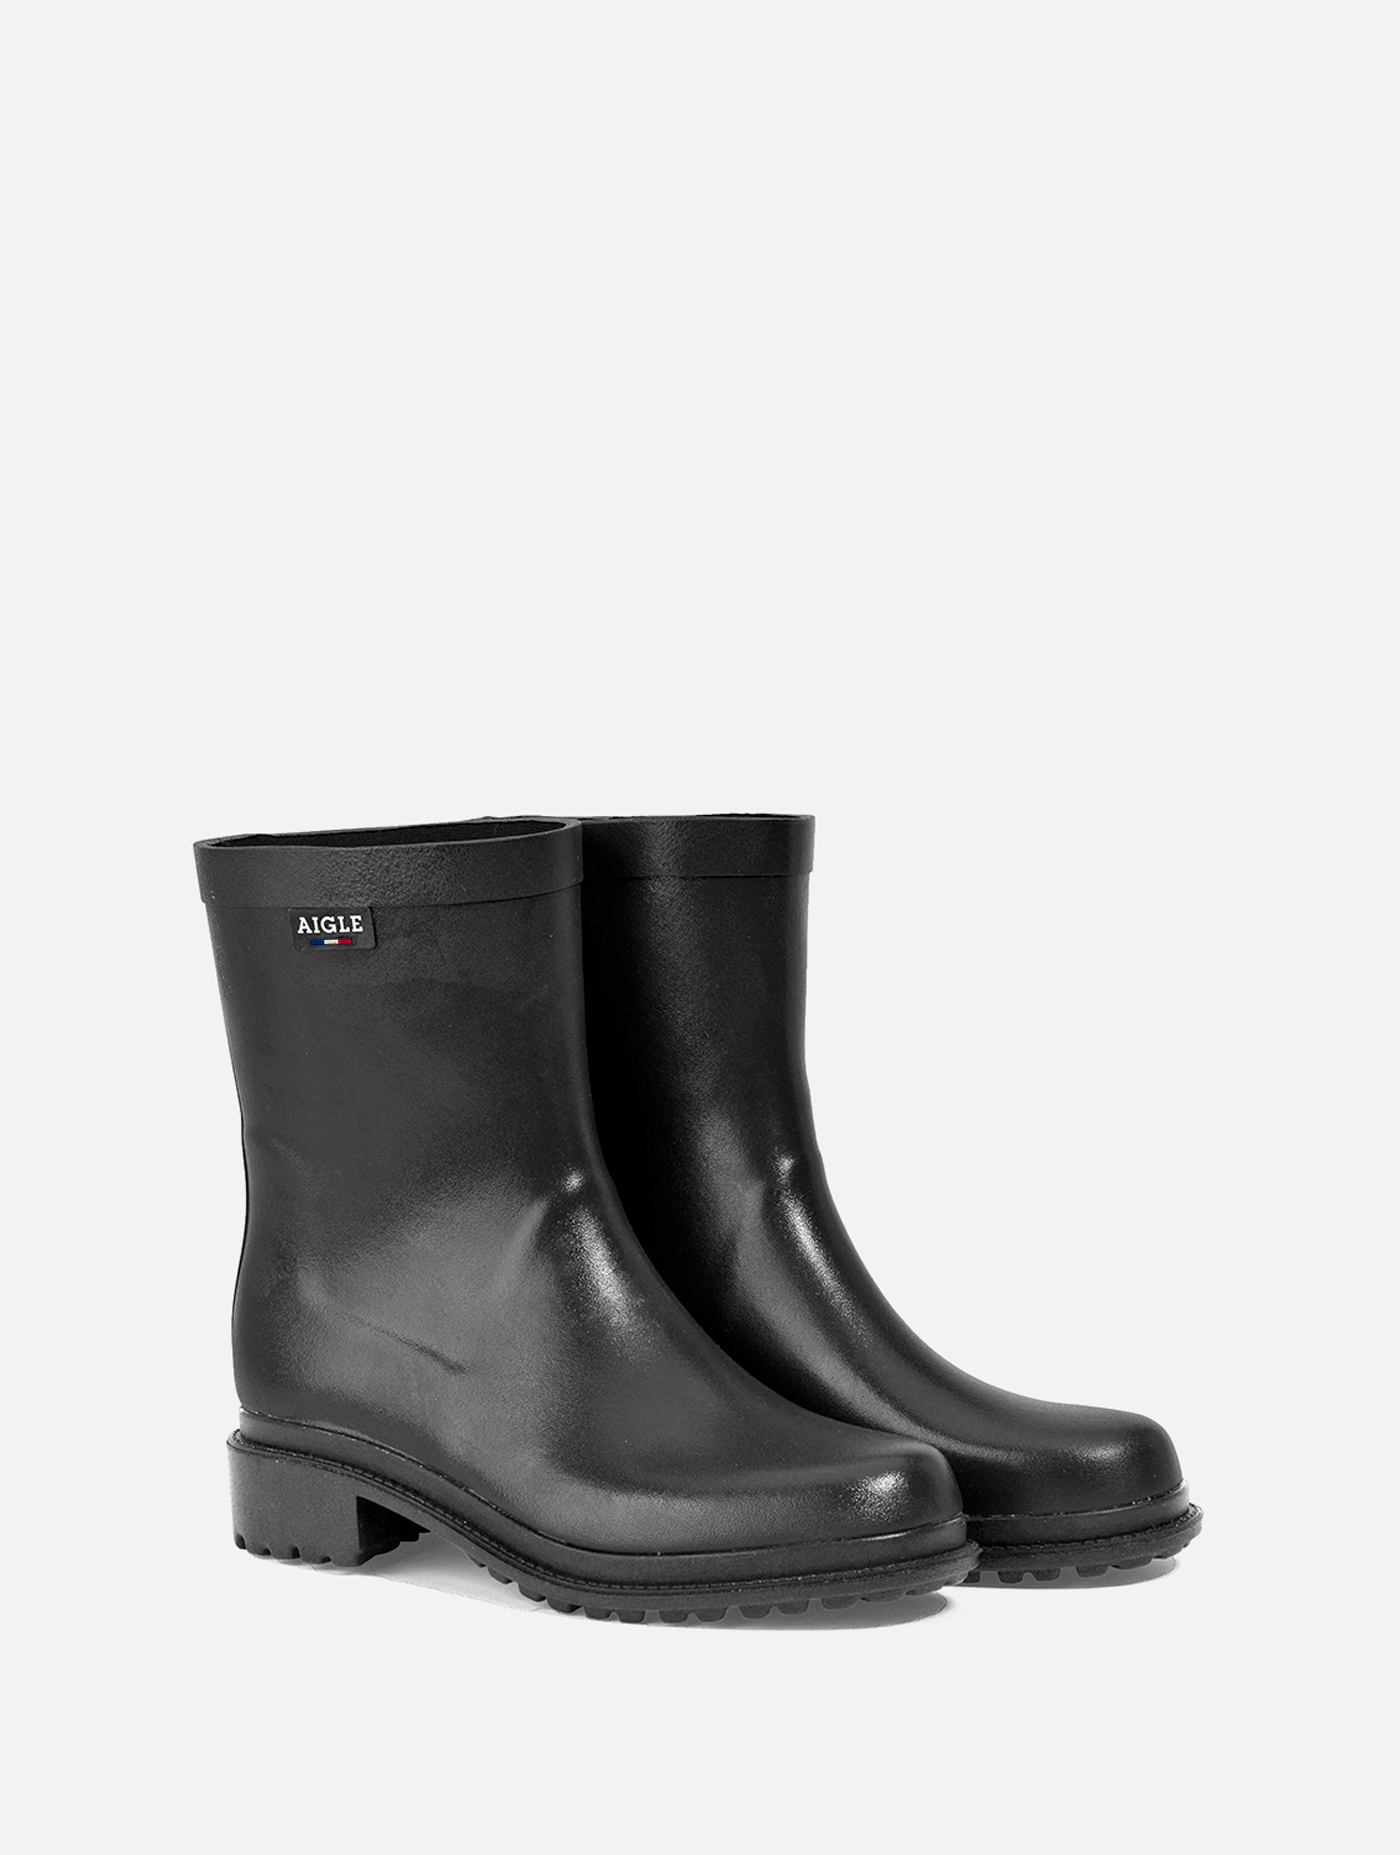 AIGLE Long boots size 6.5 Ladies 61/2 99p Start 